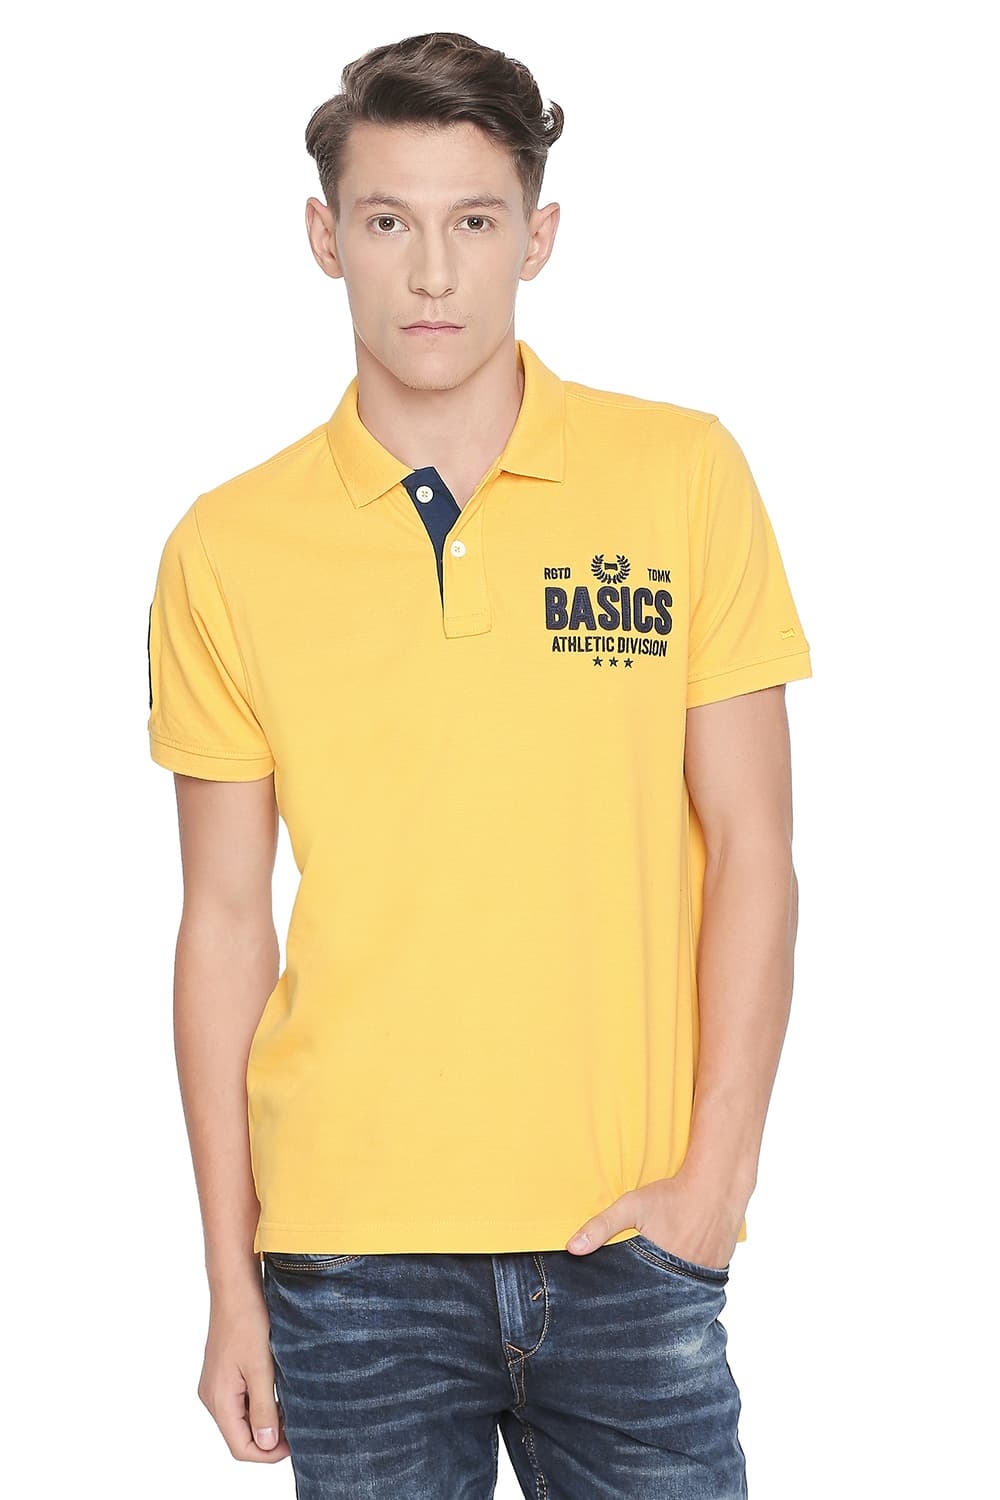 Basics | Basics Muscle Fit Banana Polo T Shirt